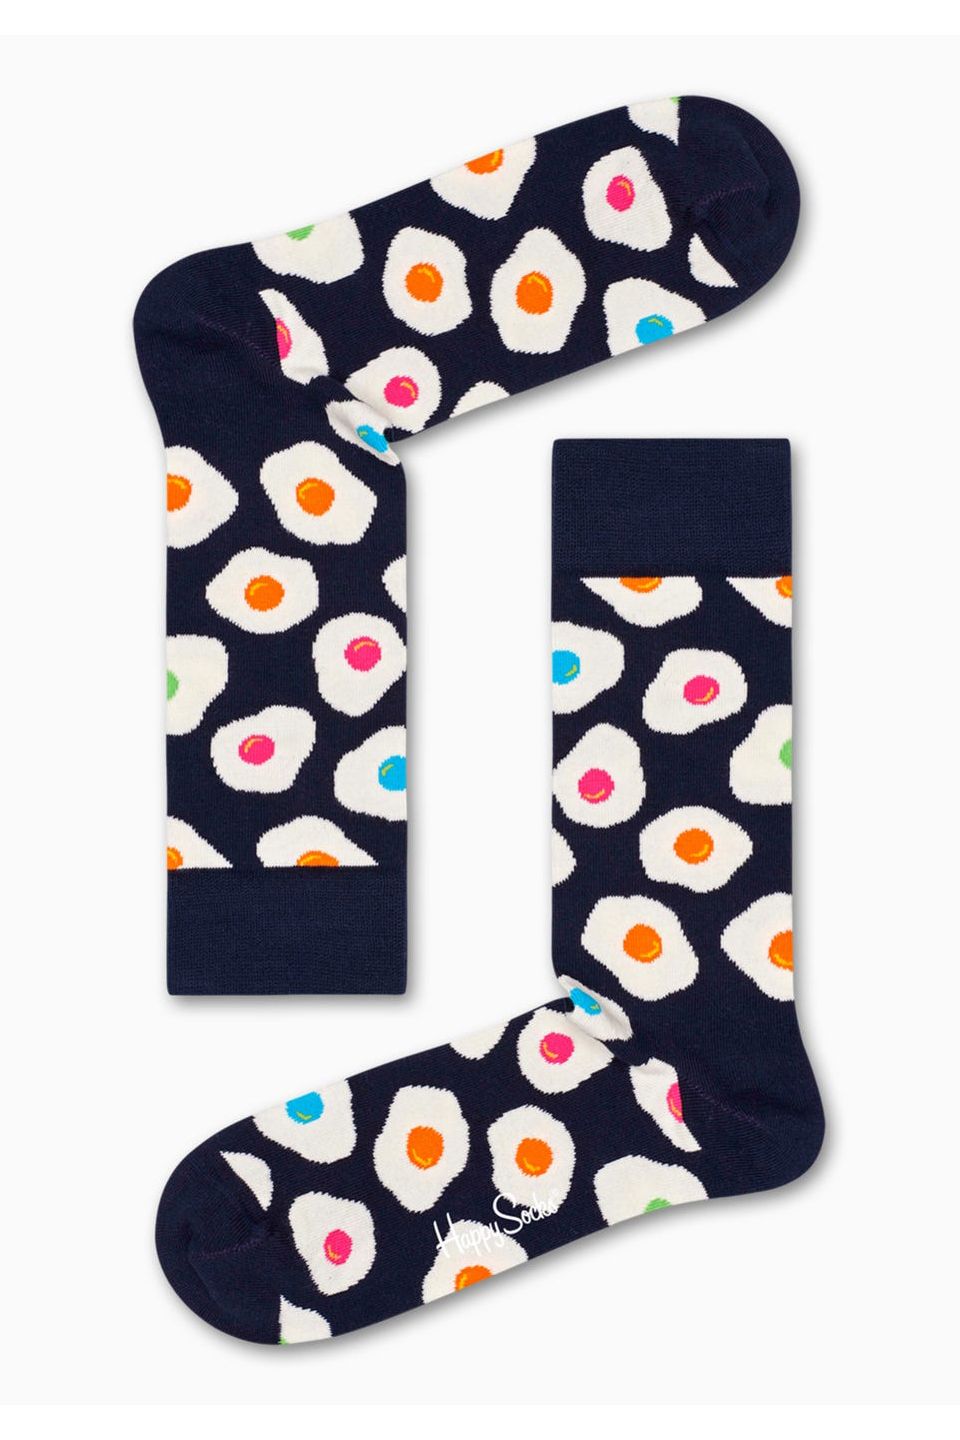 Happy Socks - 7-Day Gift Box / セブンデイボックス | Retikle Online ...